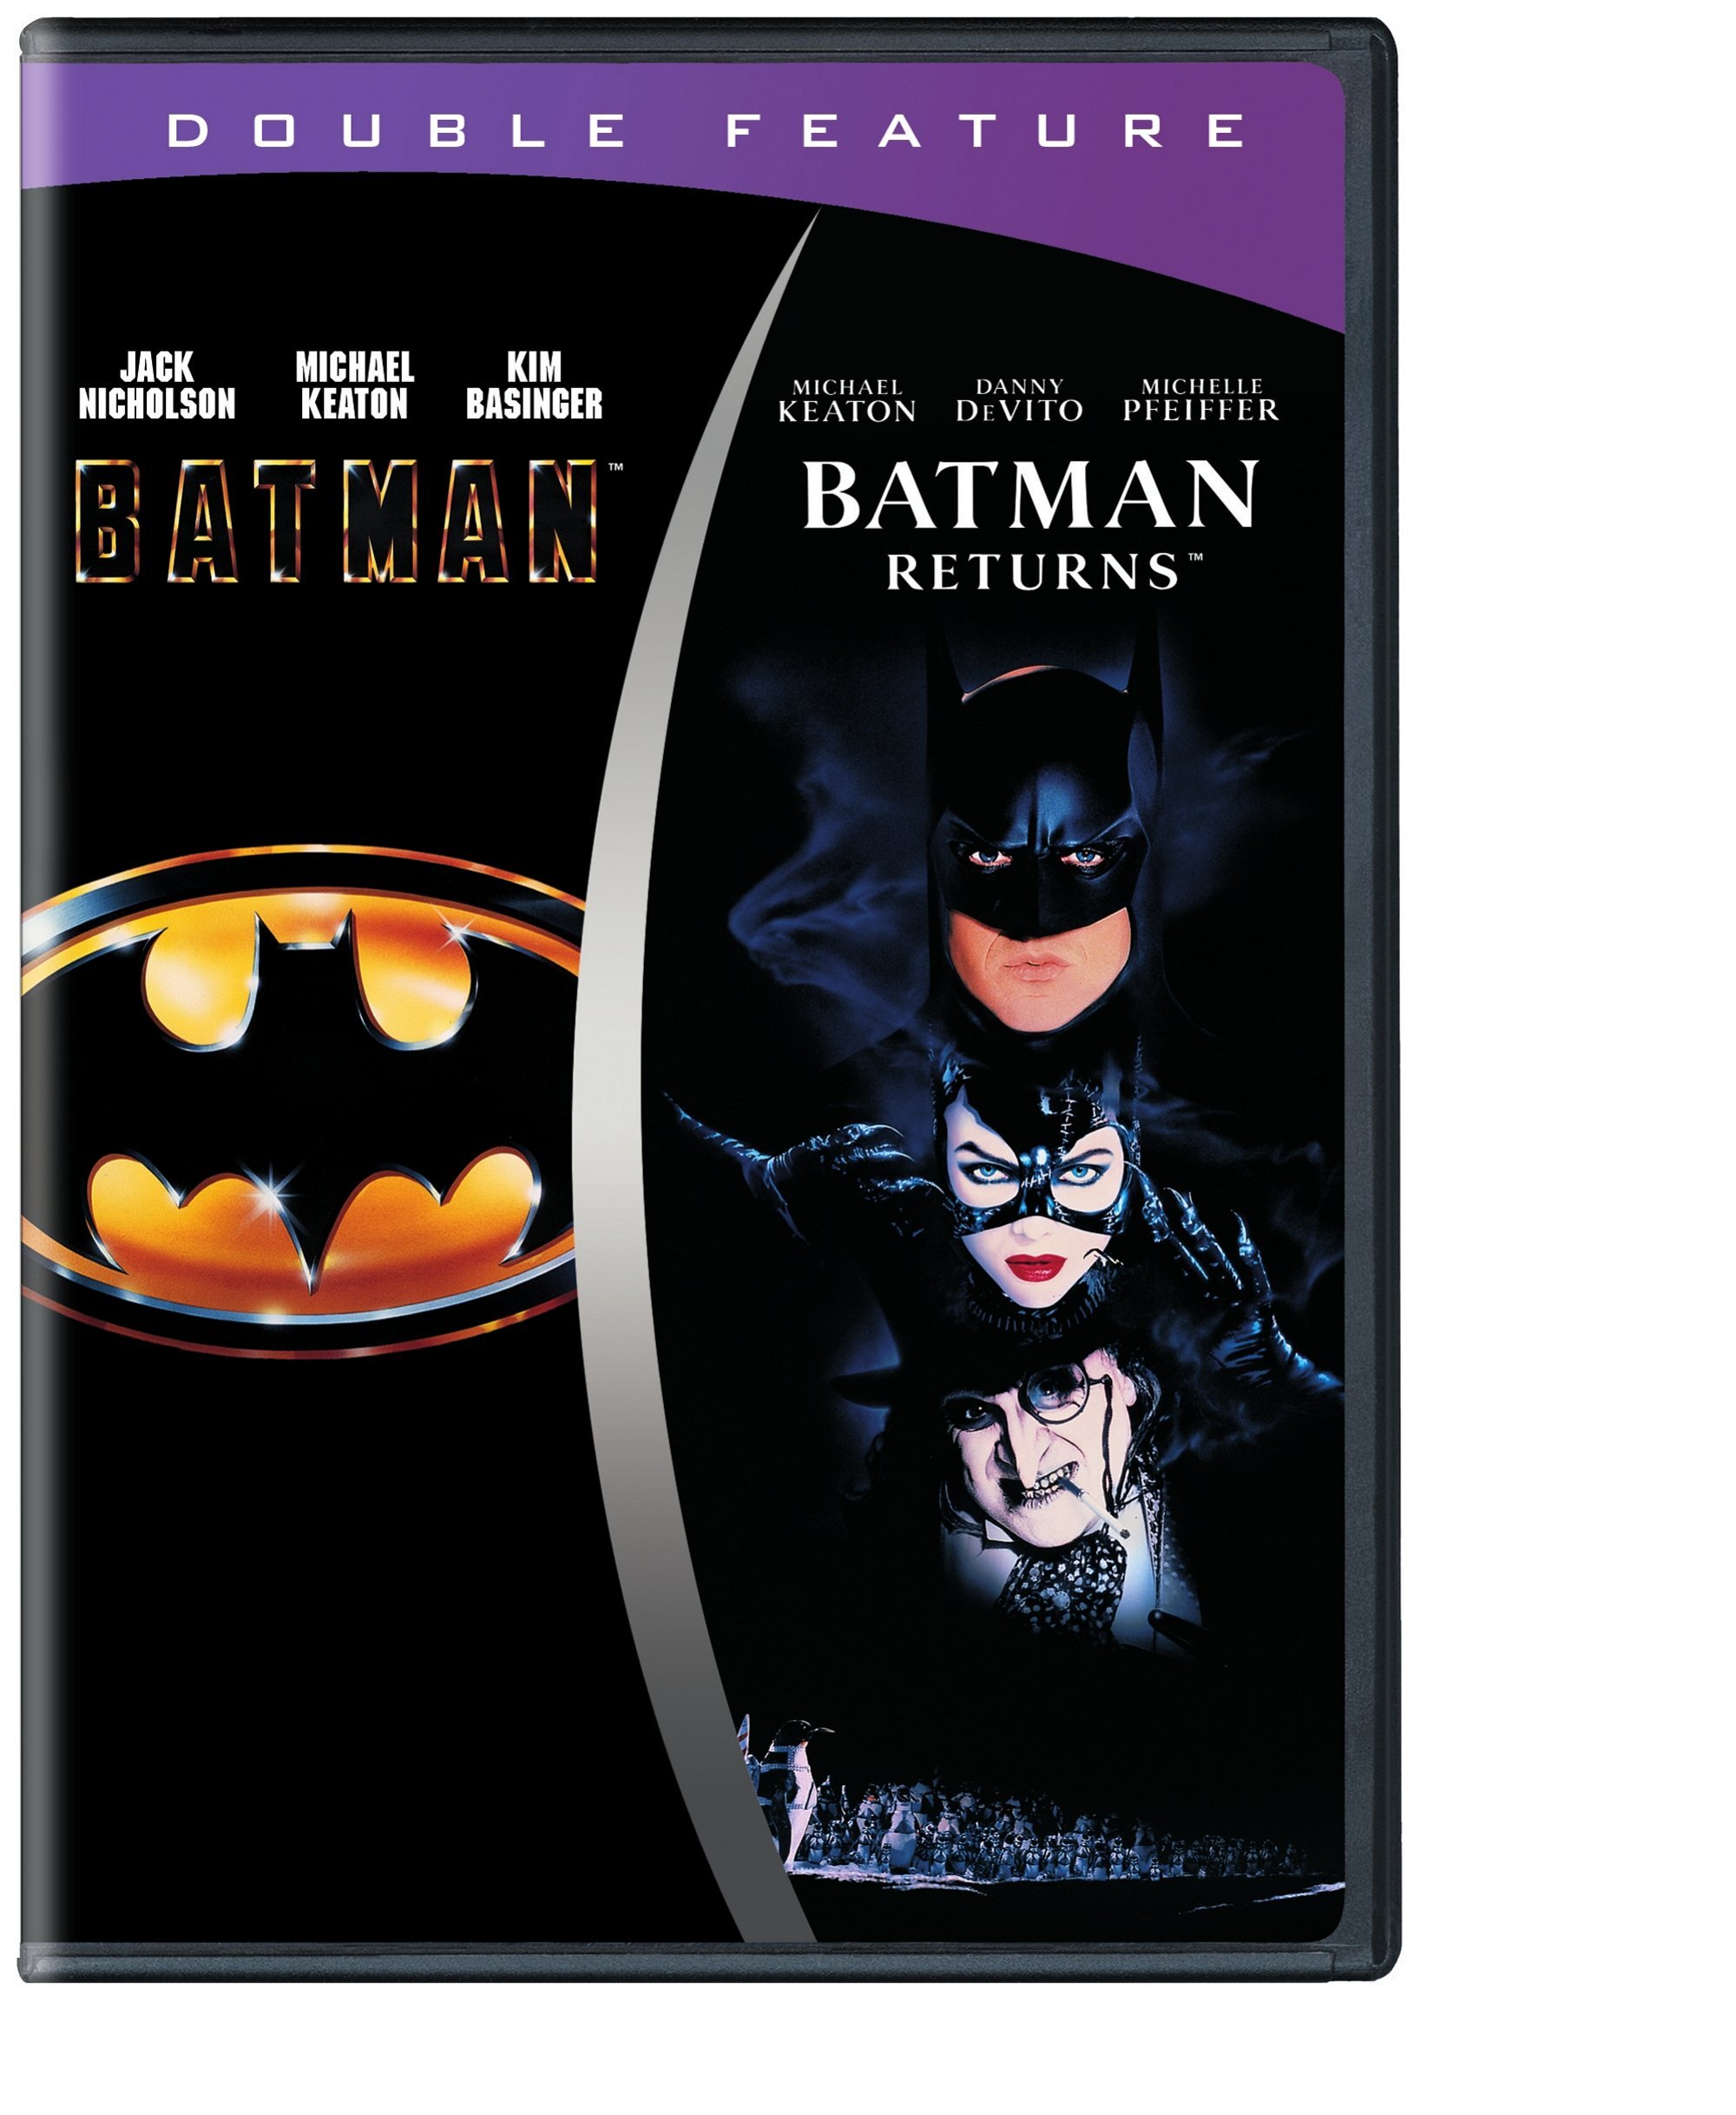 Batman/Batman Returns (DVD Double Feature) - DVD [ 1992 ]  - Action Movies On DVD - Movies On GRUV